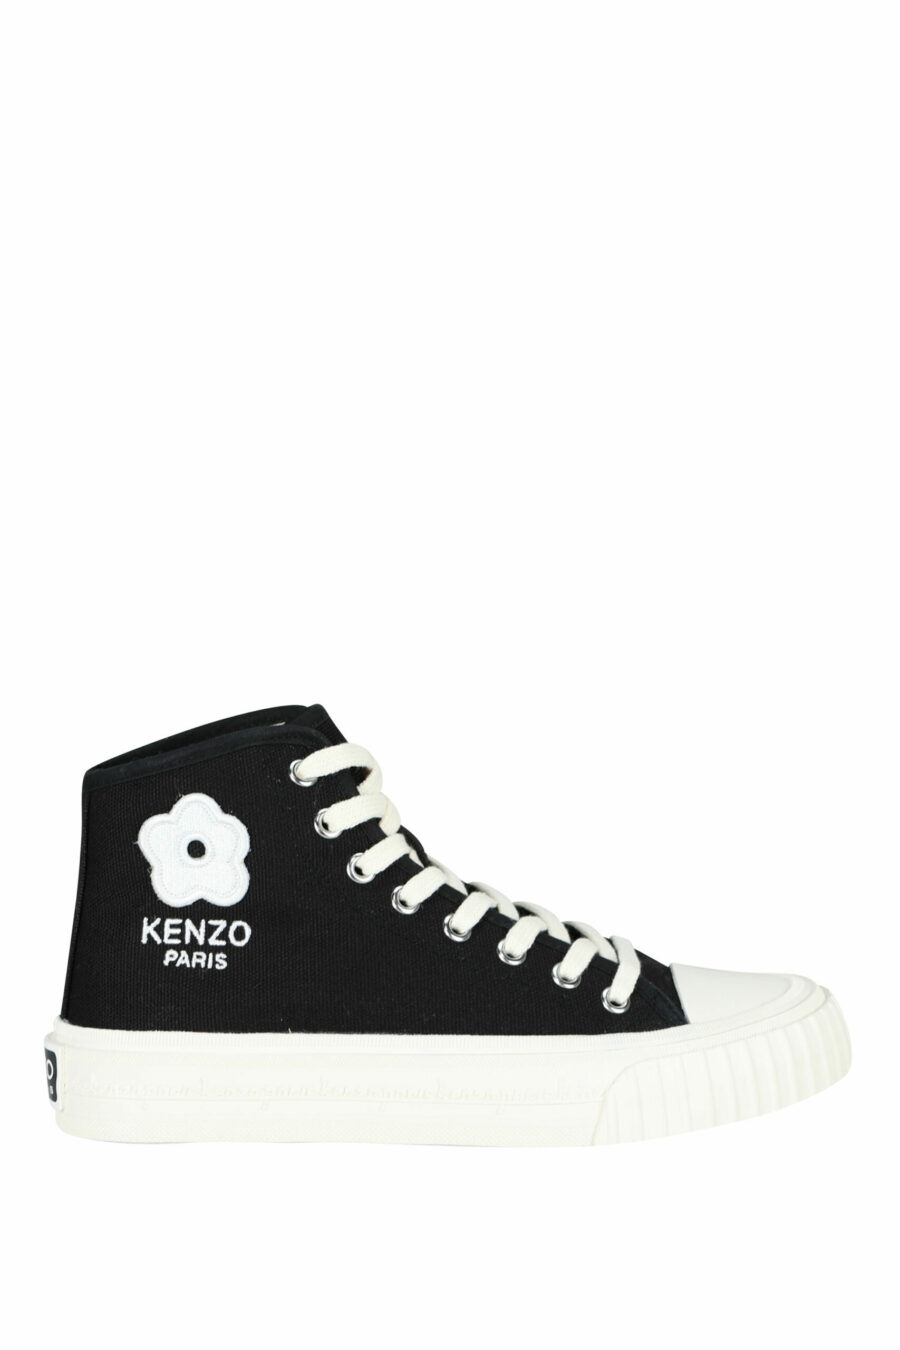 Zapatillas negras altas "kenzo foxy" con logo "boke flower" blanco - 3612230639515 scaled